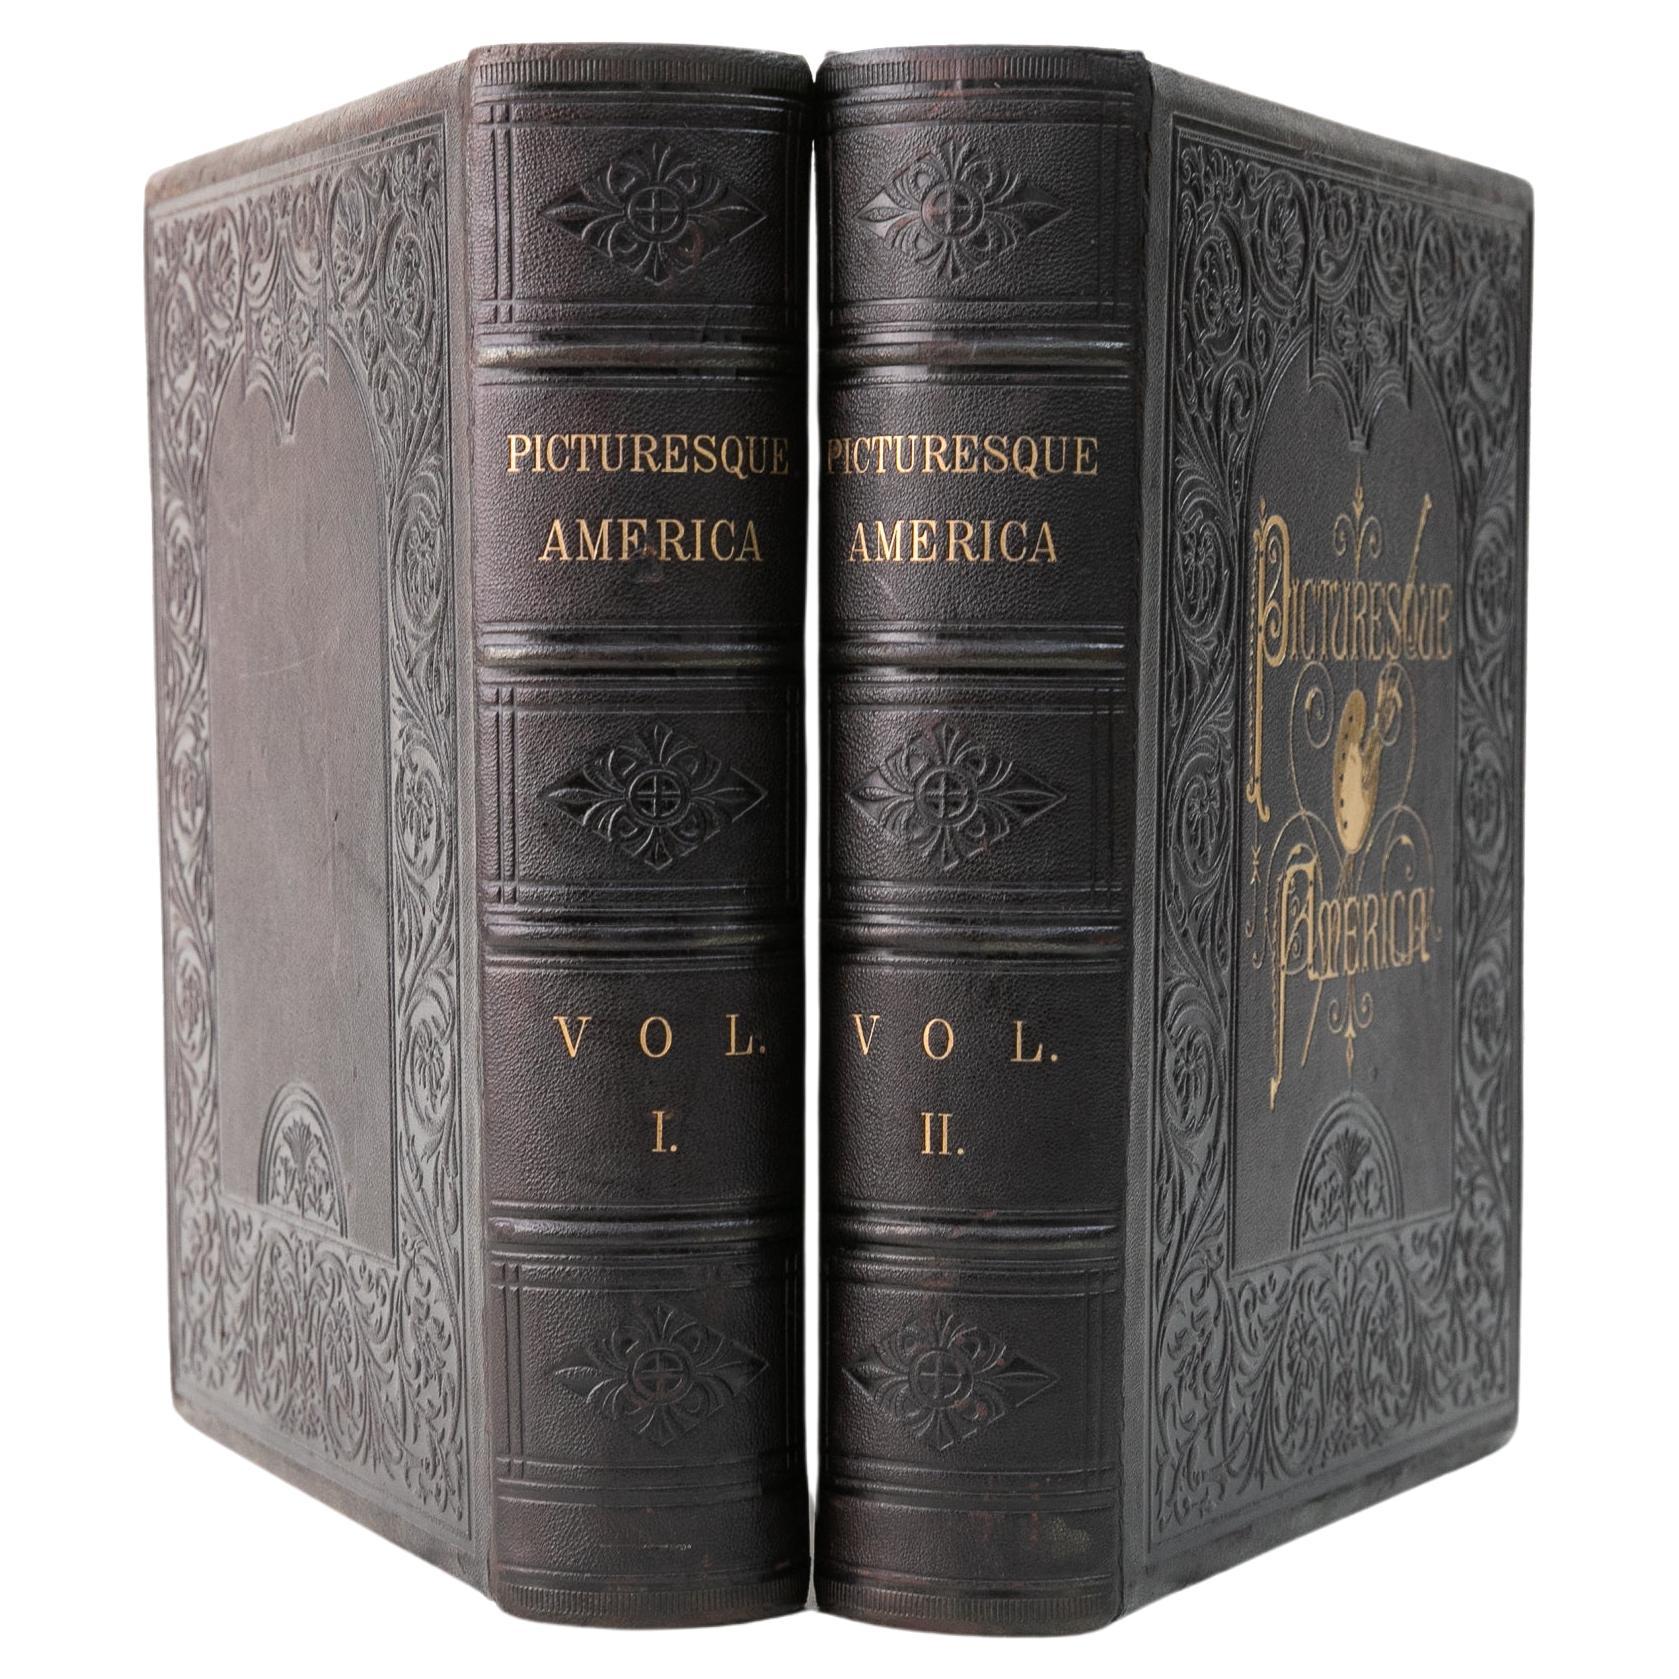 2 Volumes. William Cullen Bryant, Picturesque America. For Sale